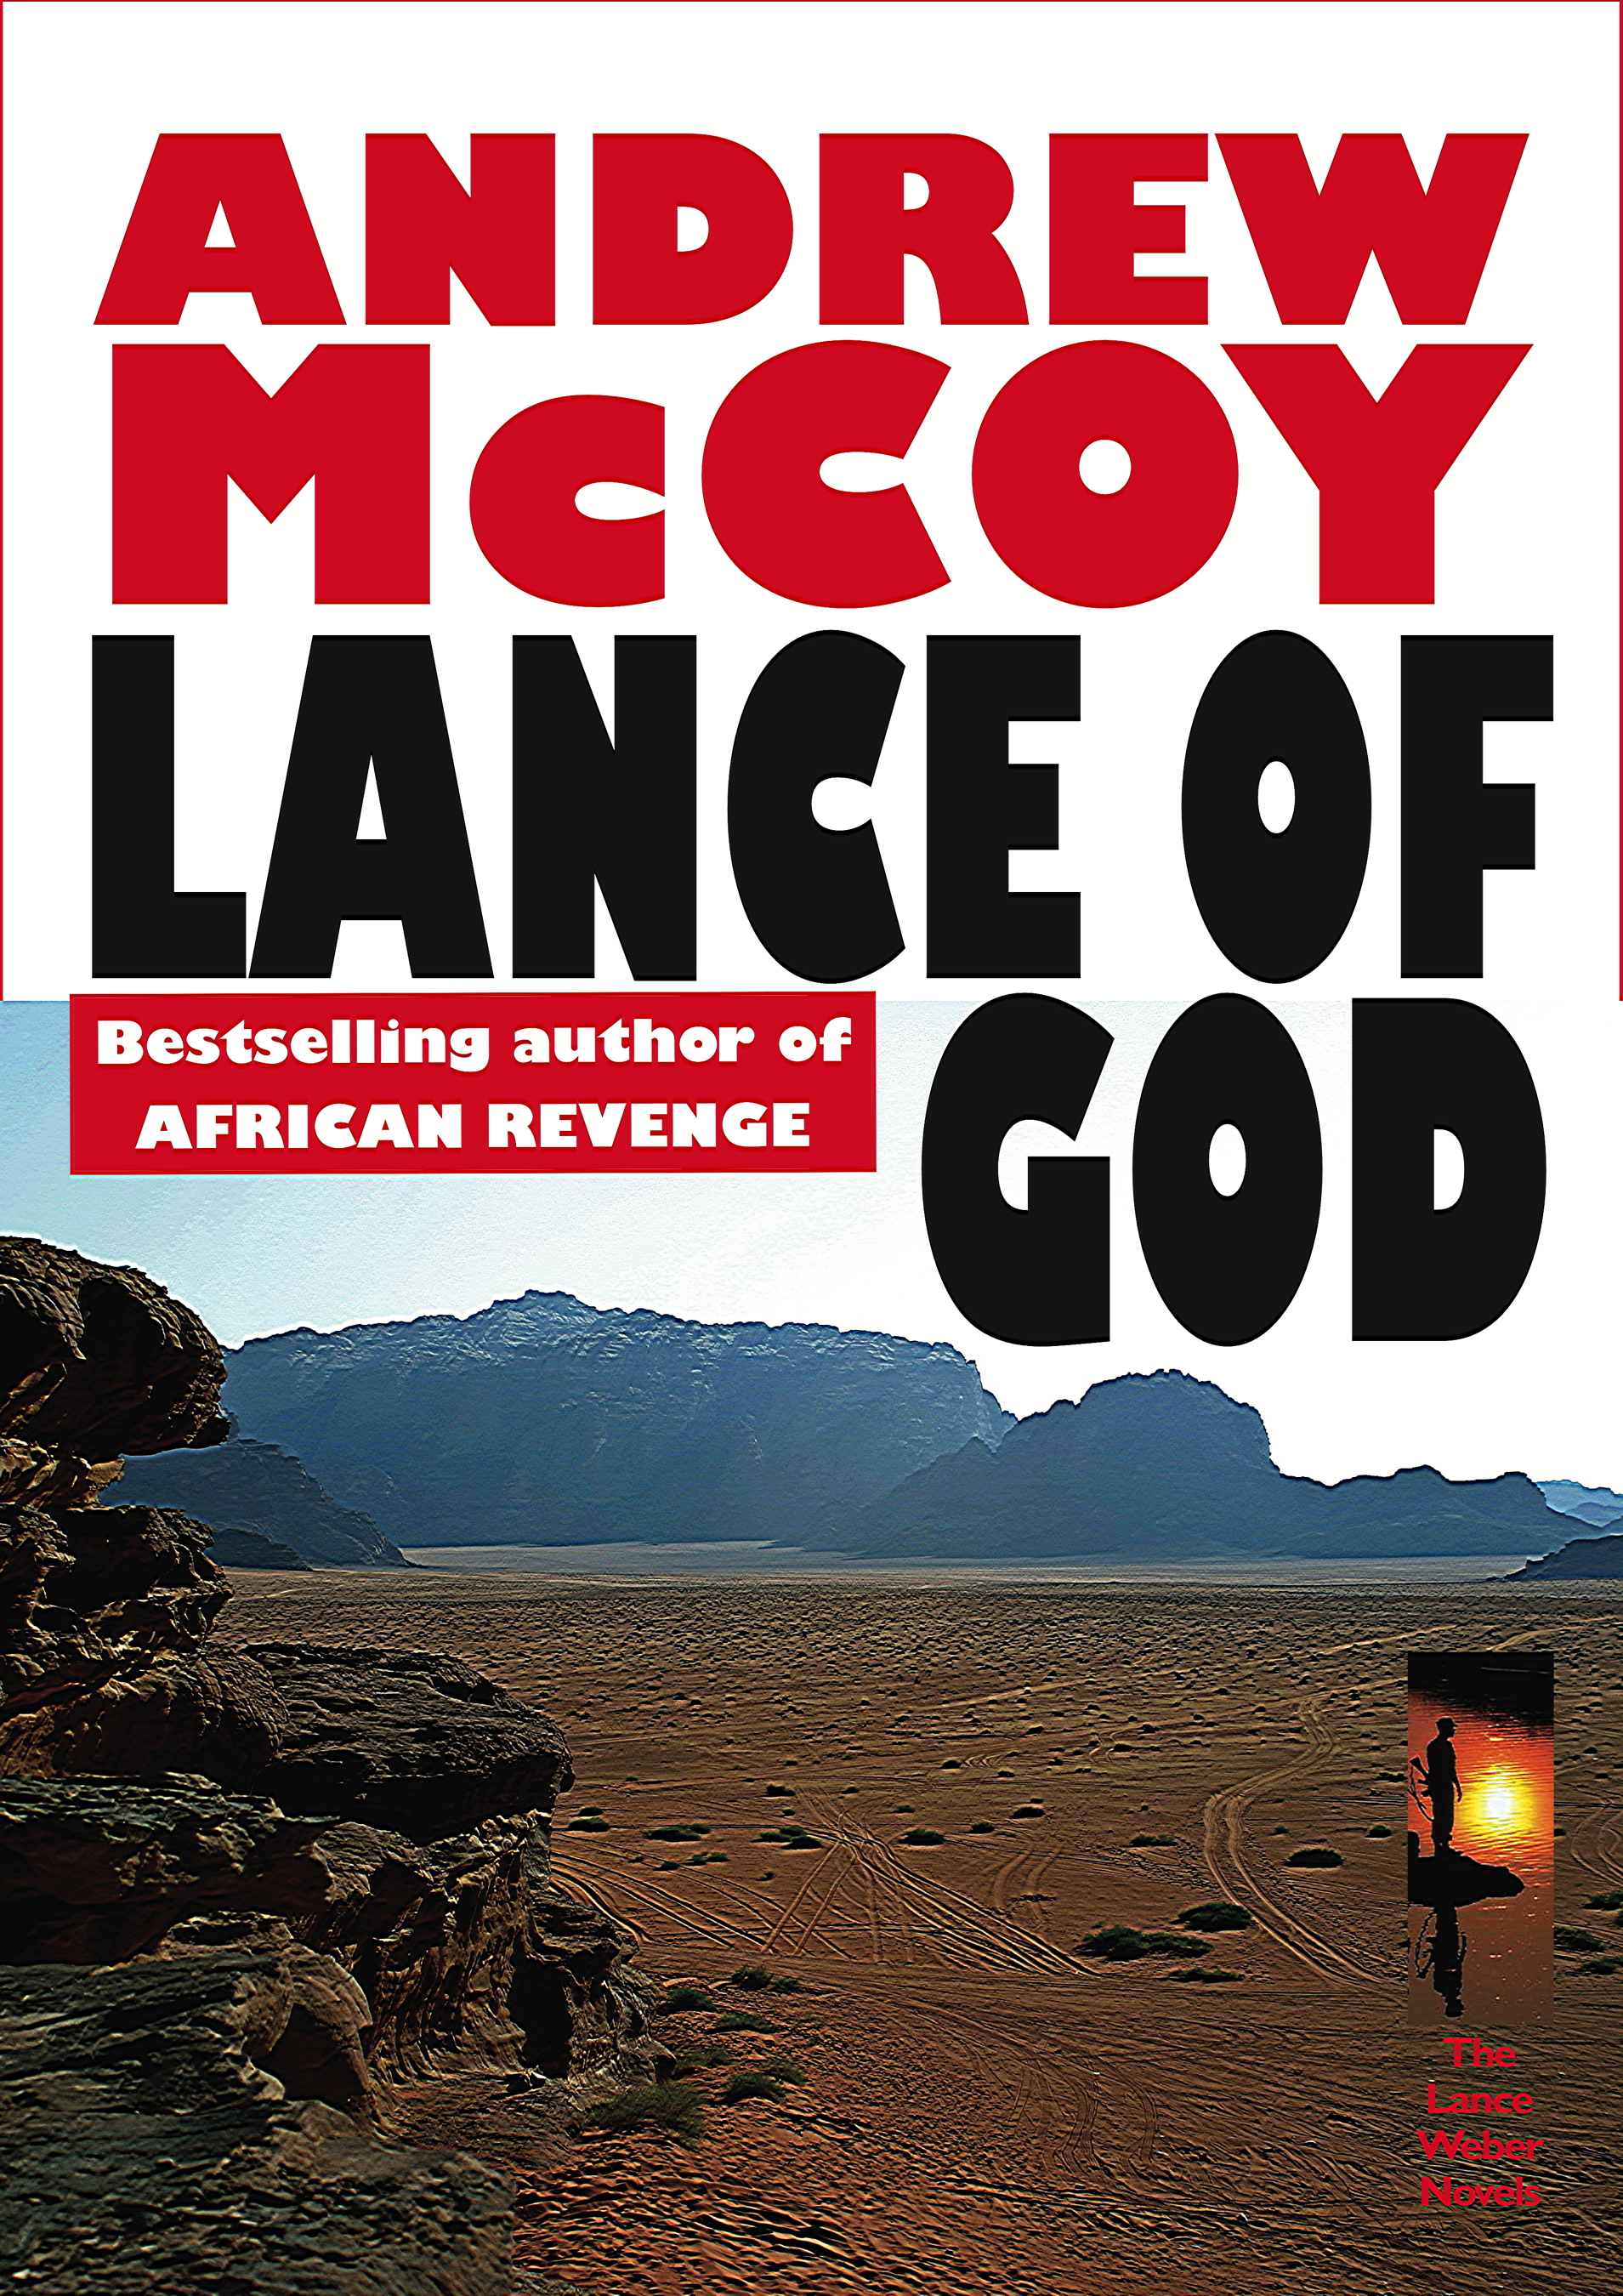 LANCE OF GOD (Lance Weber 4) by Andrew McCoy